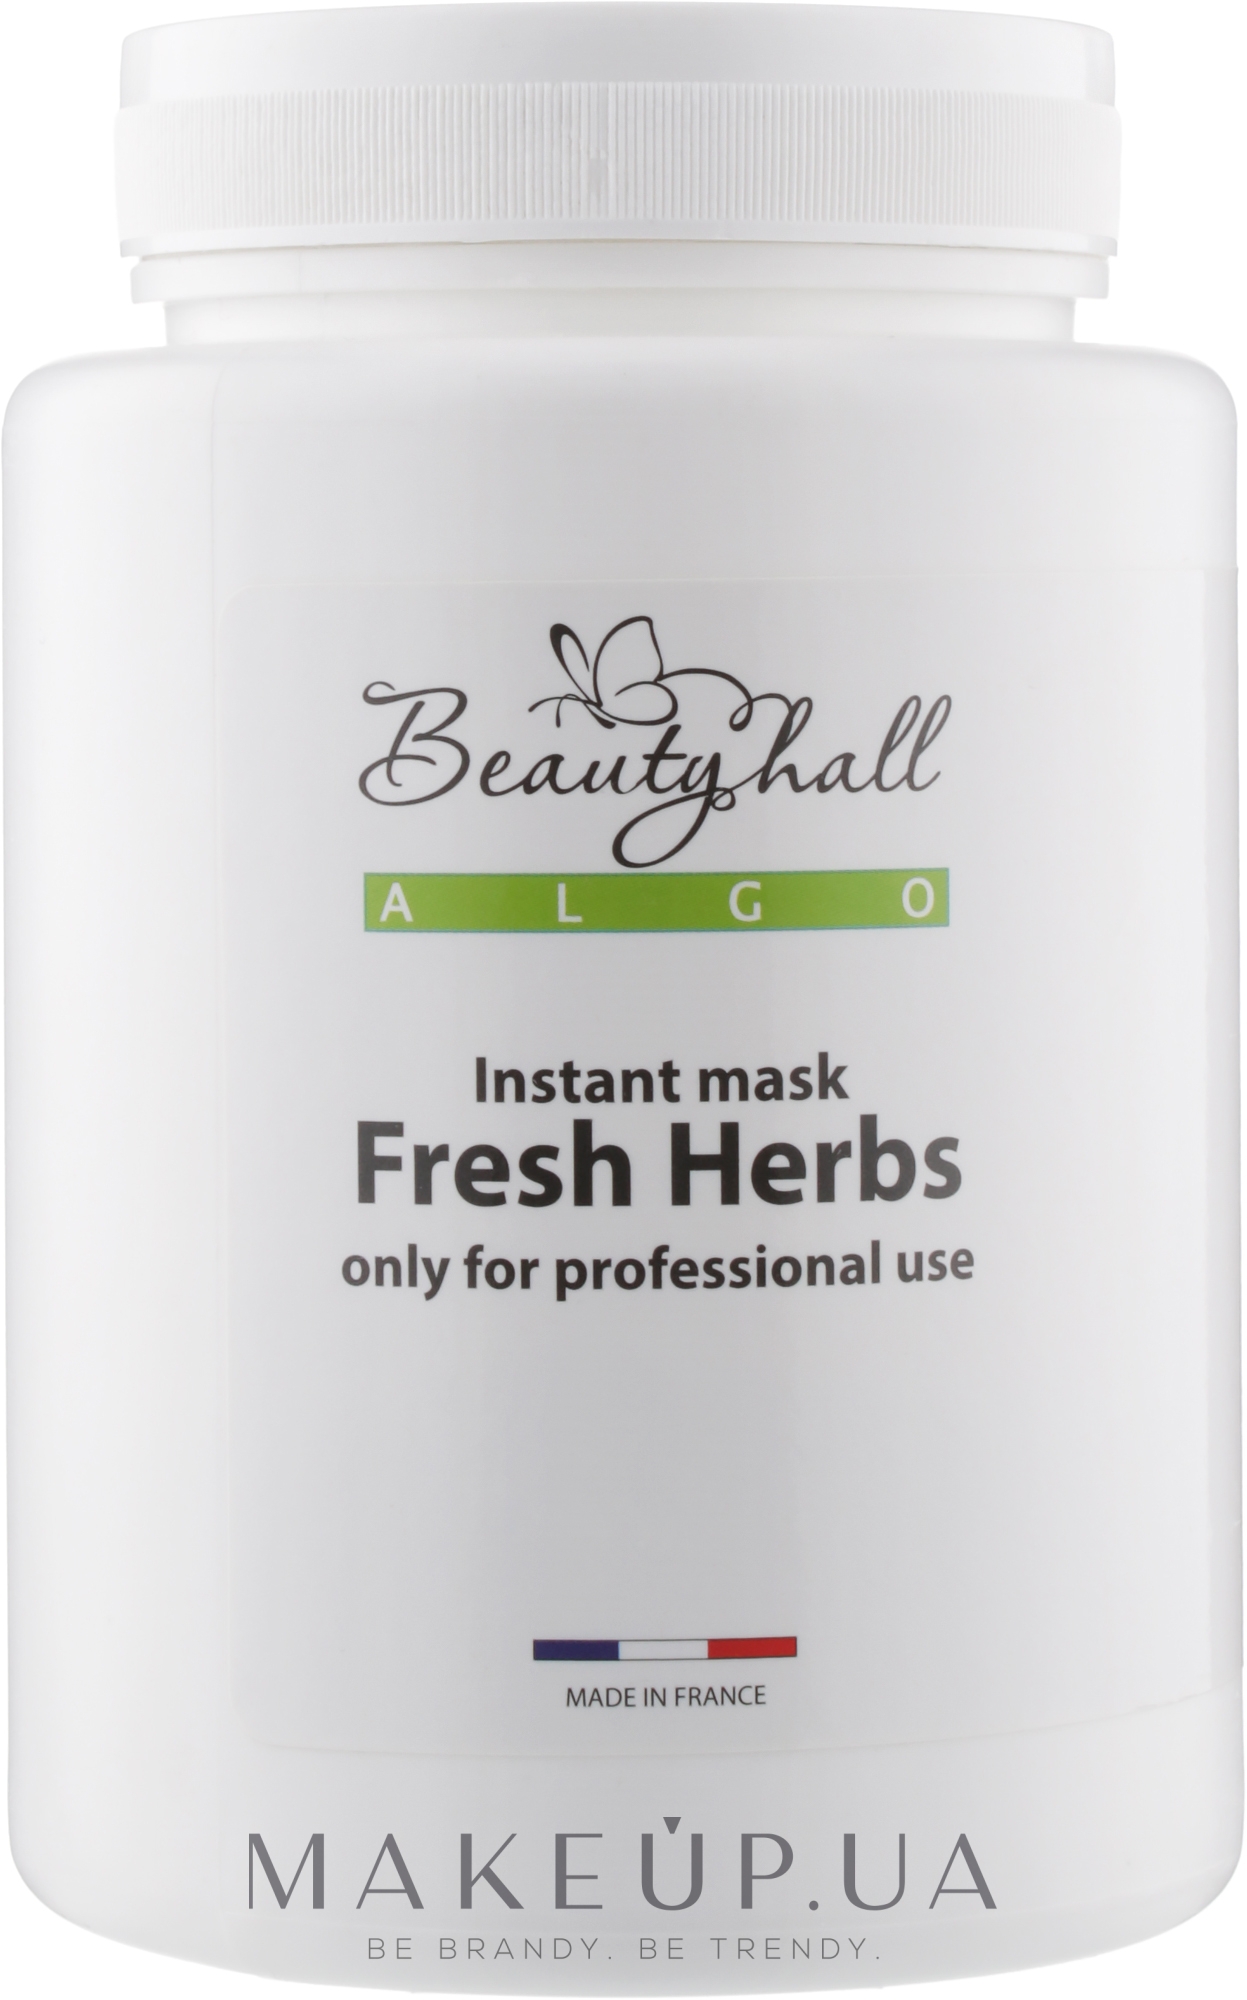 Кремовая маска "Свежие травы" - Beautyhall Algo Instant Mask Fresh Herbs — фото 200g